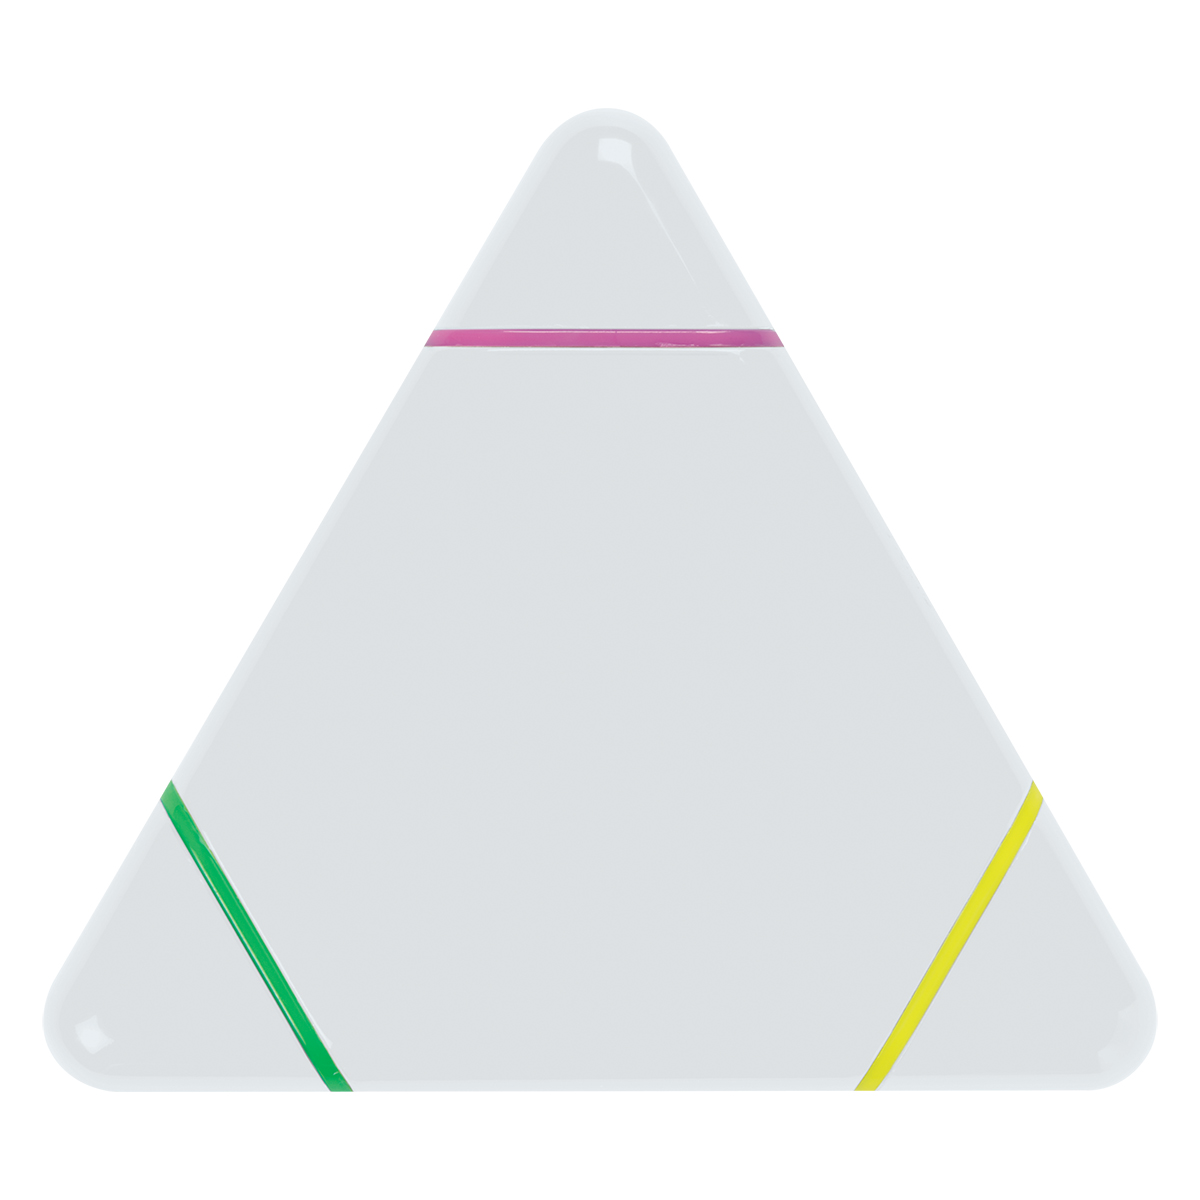 333 - Marcatextos Triangular de Plástico